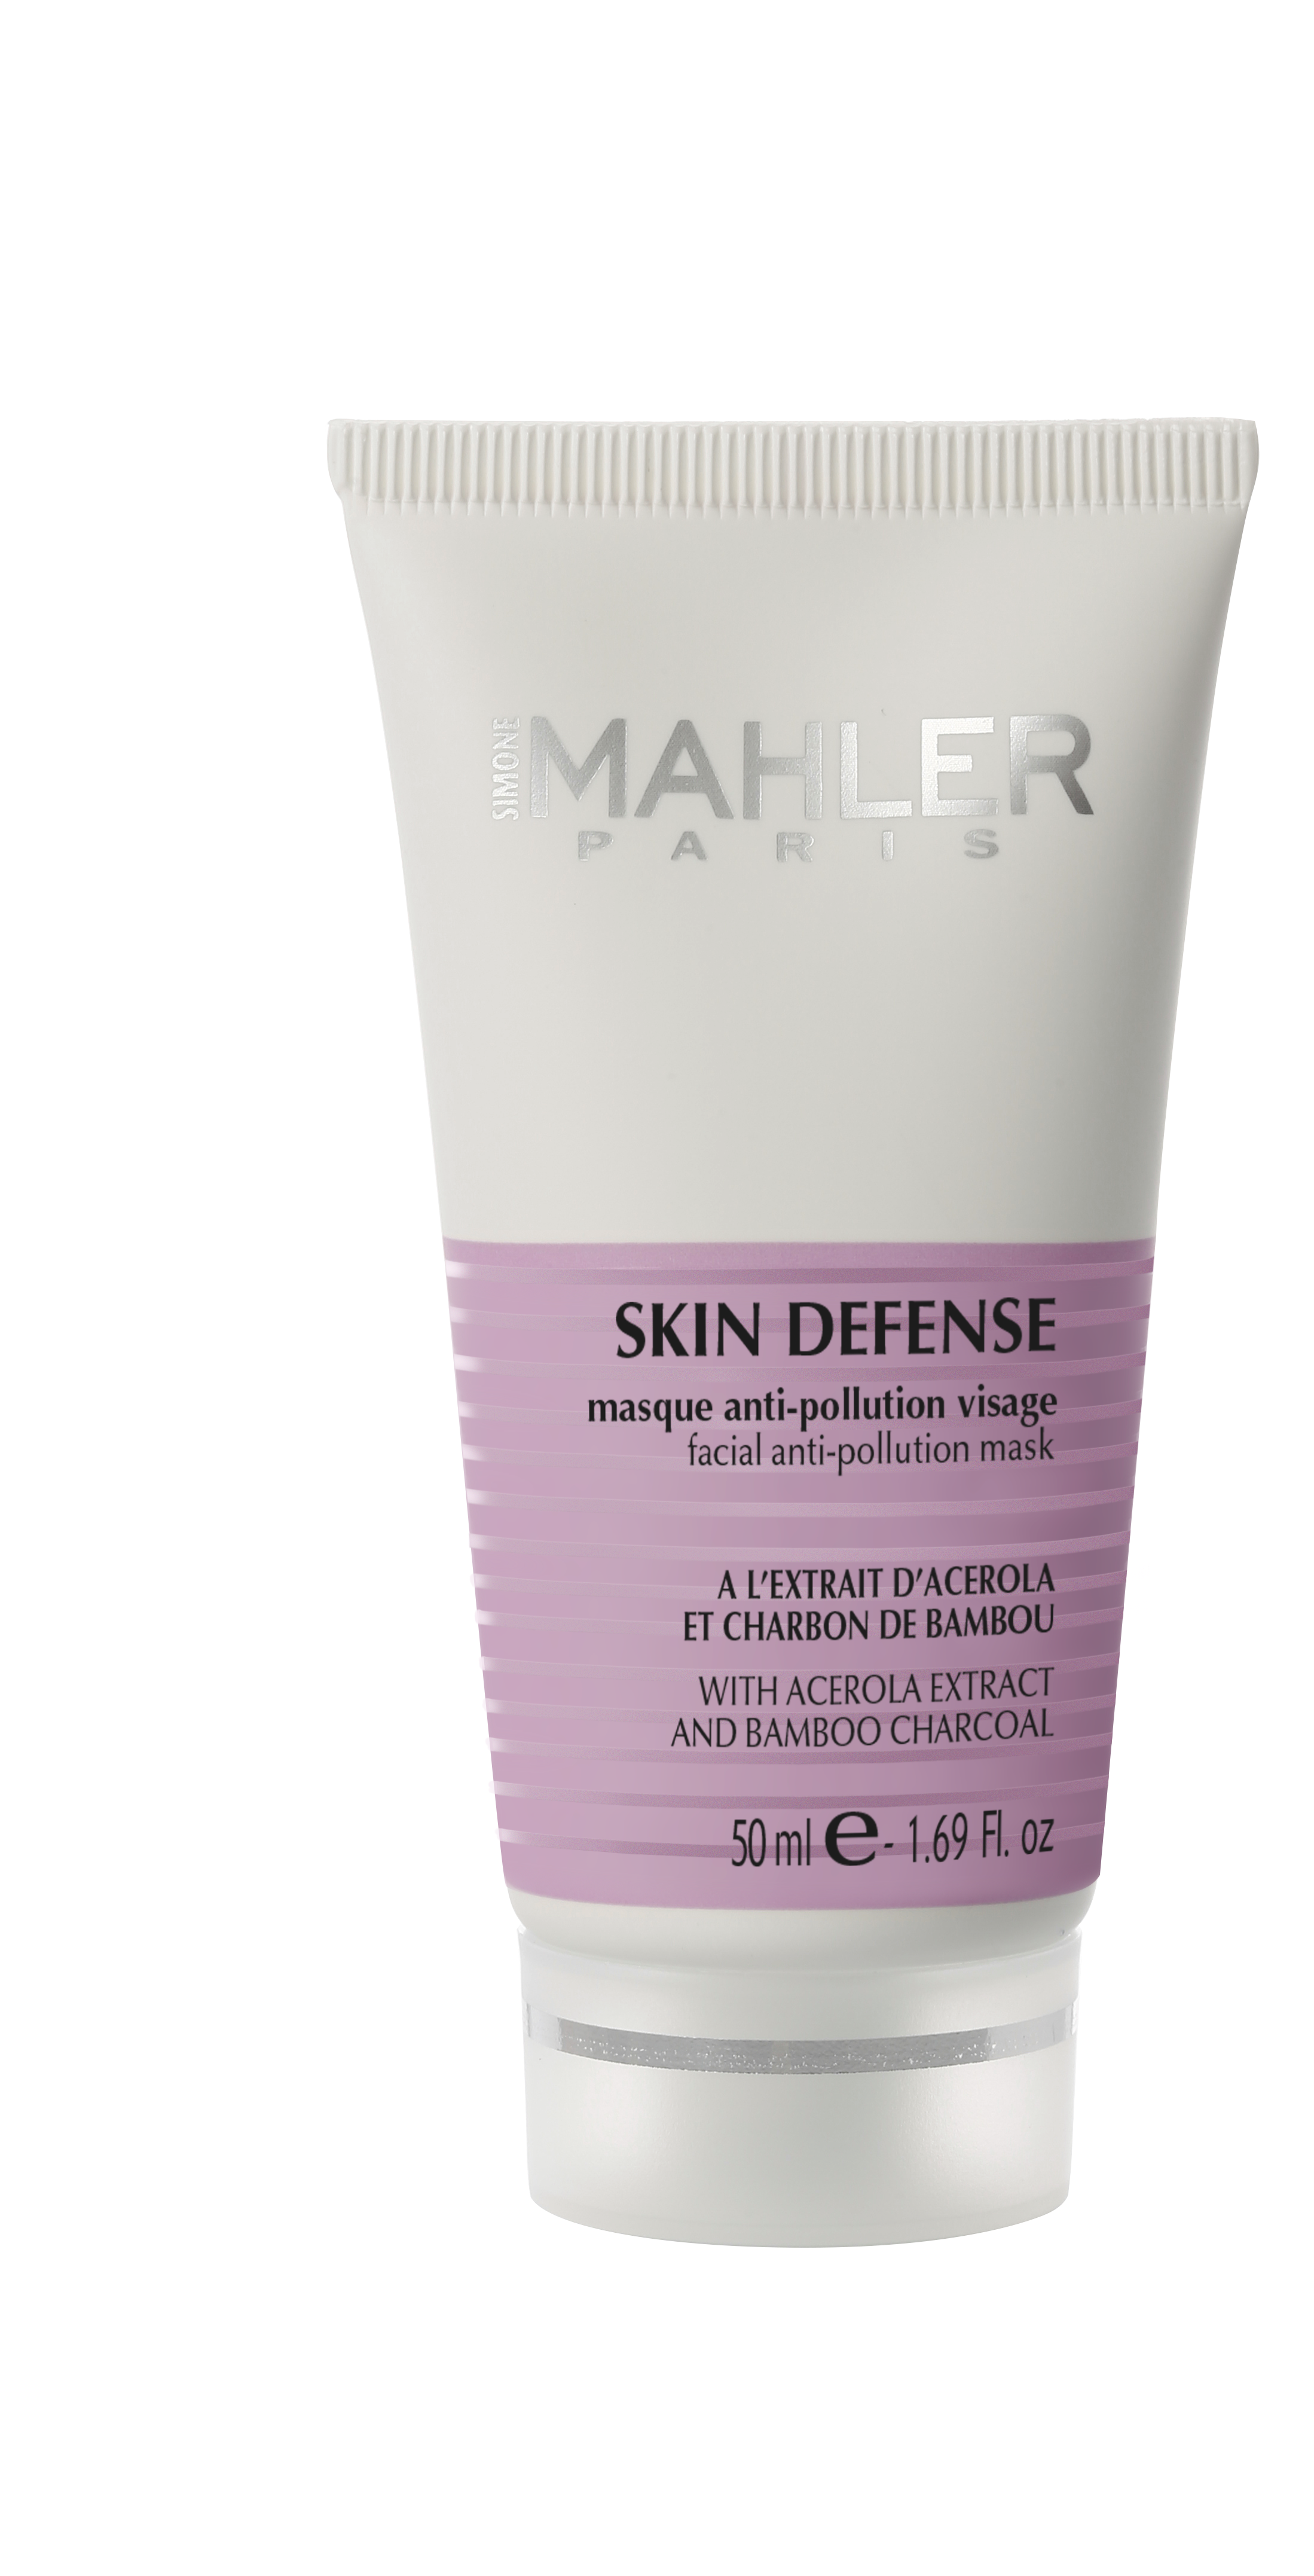 Skin Defense masque